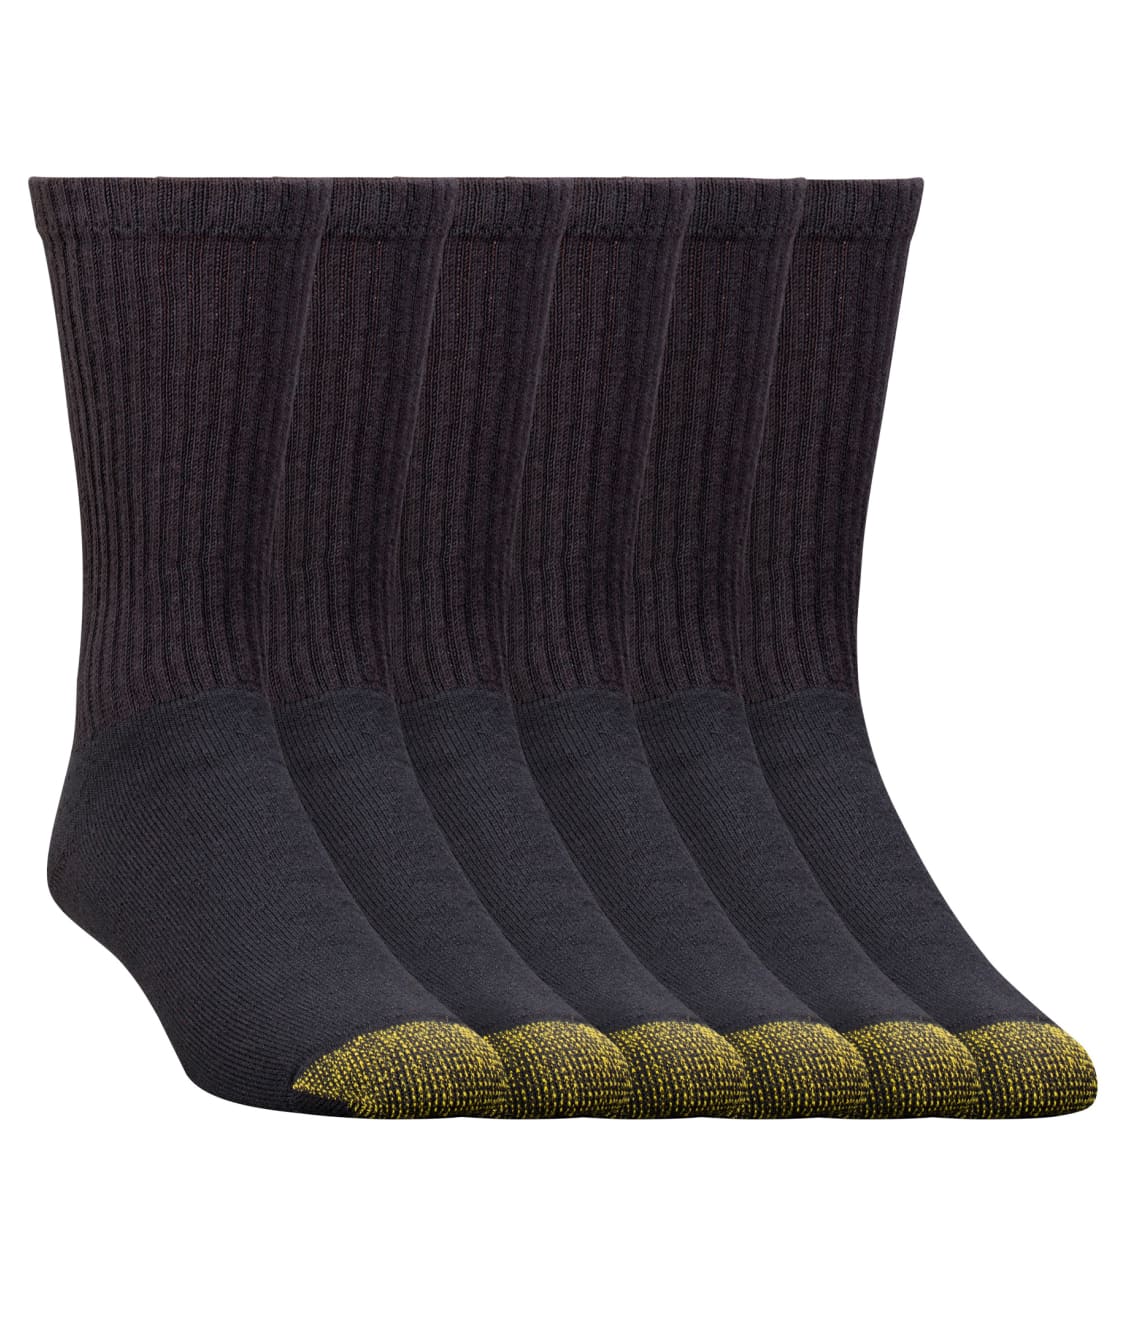 Gold Toe: Cotton Cushion Crew Socks 6-Pack 656S